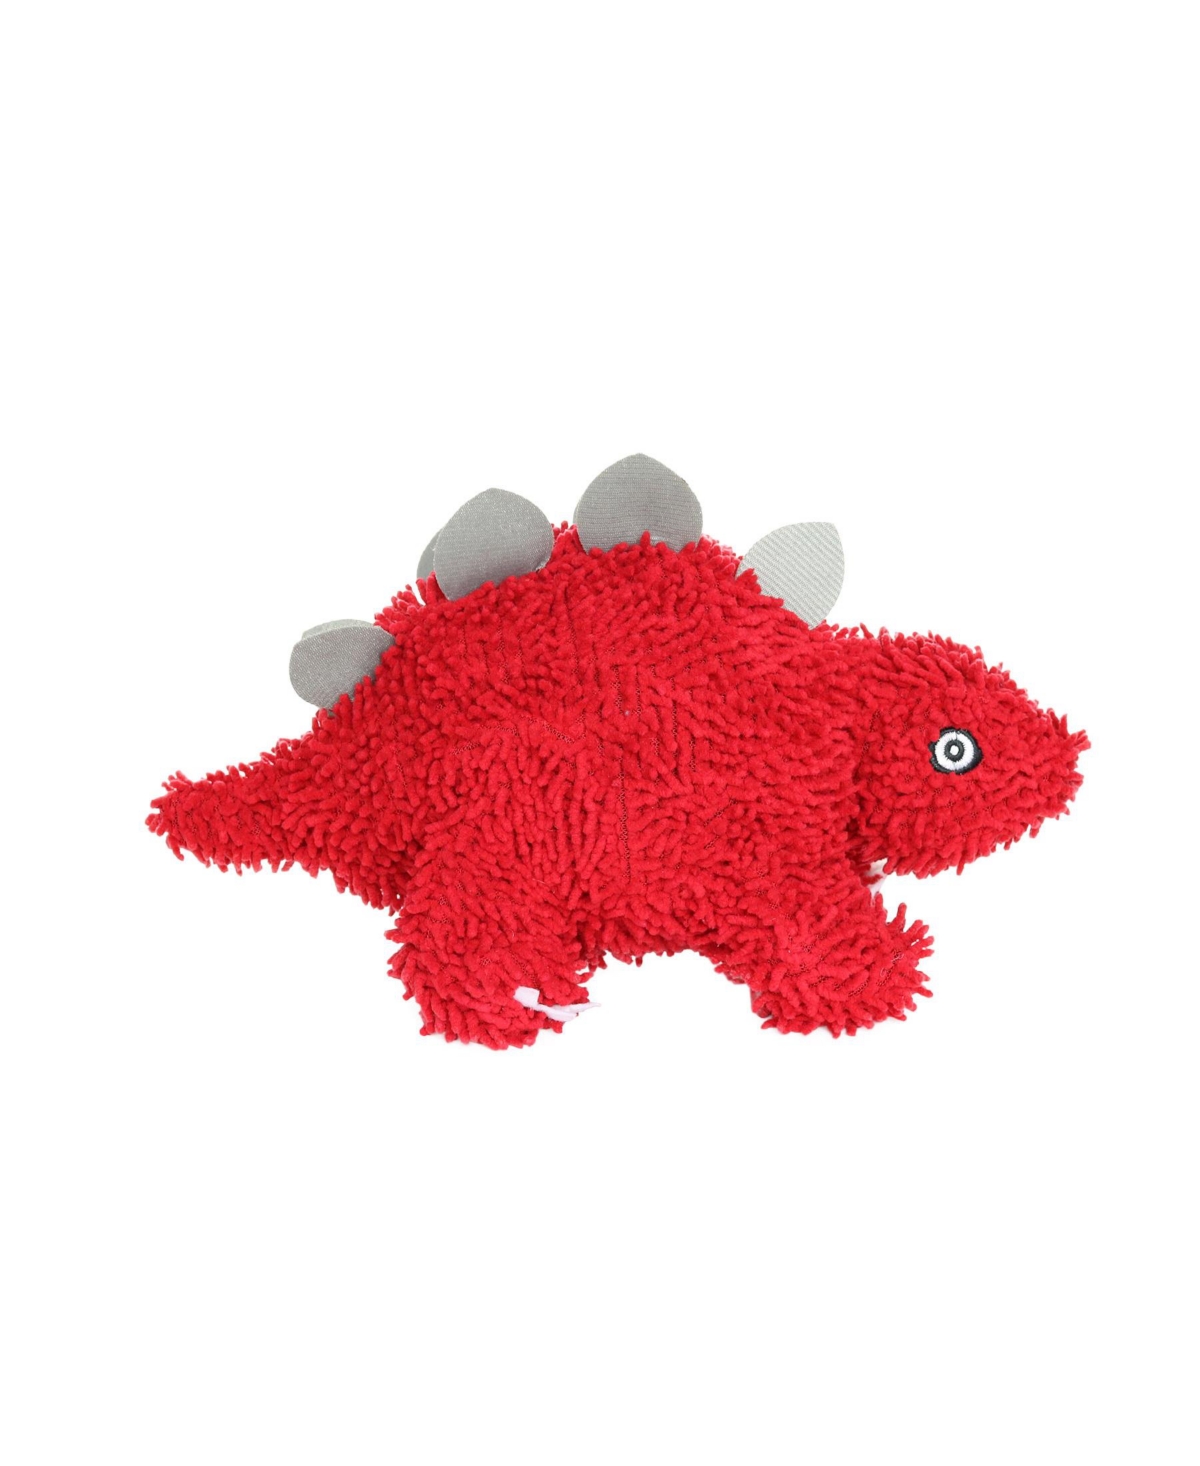 Microfiber Ball Med Stegosaurus Red, Dog Toy - Red